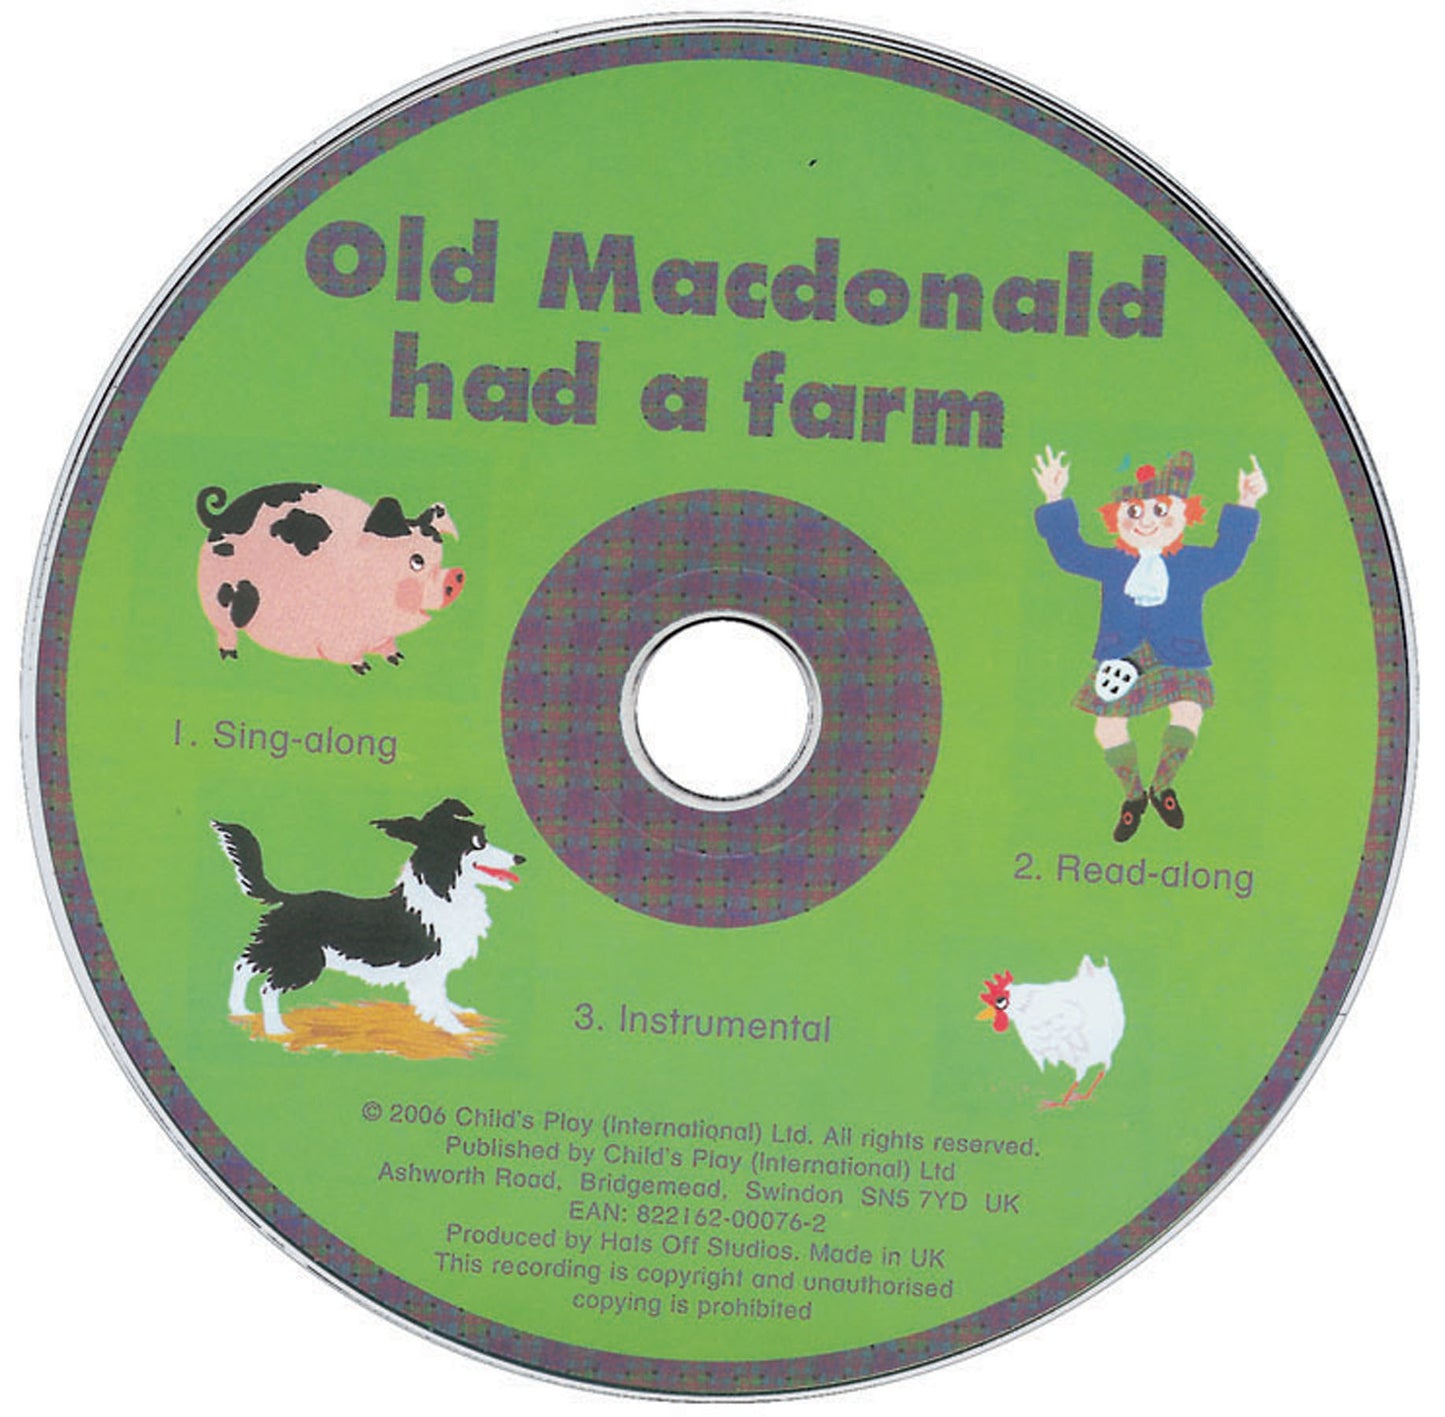 Old Macdonald had a Farm CD